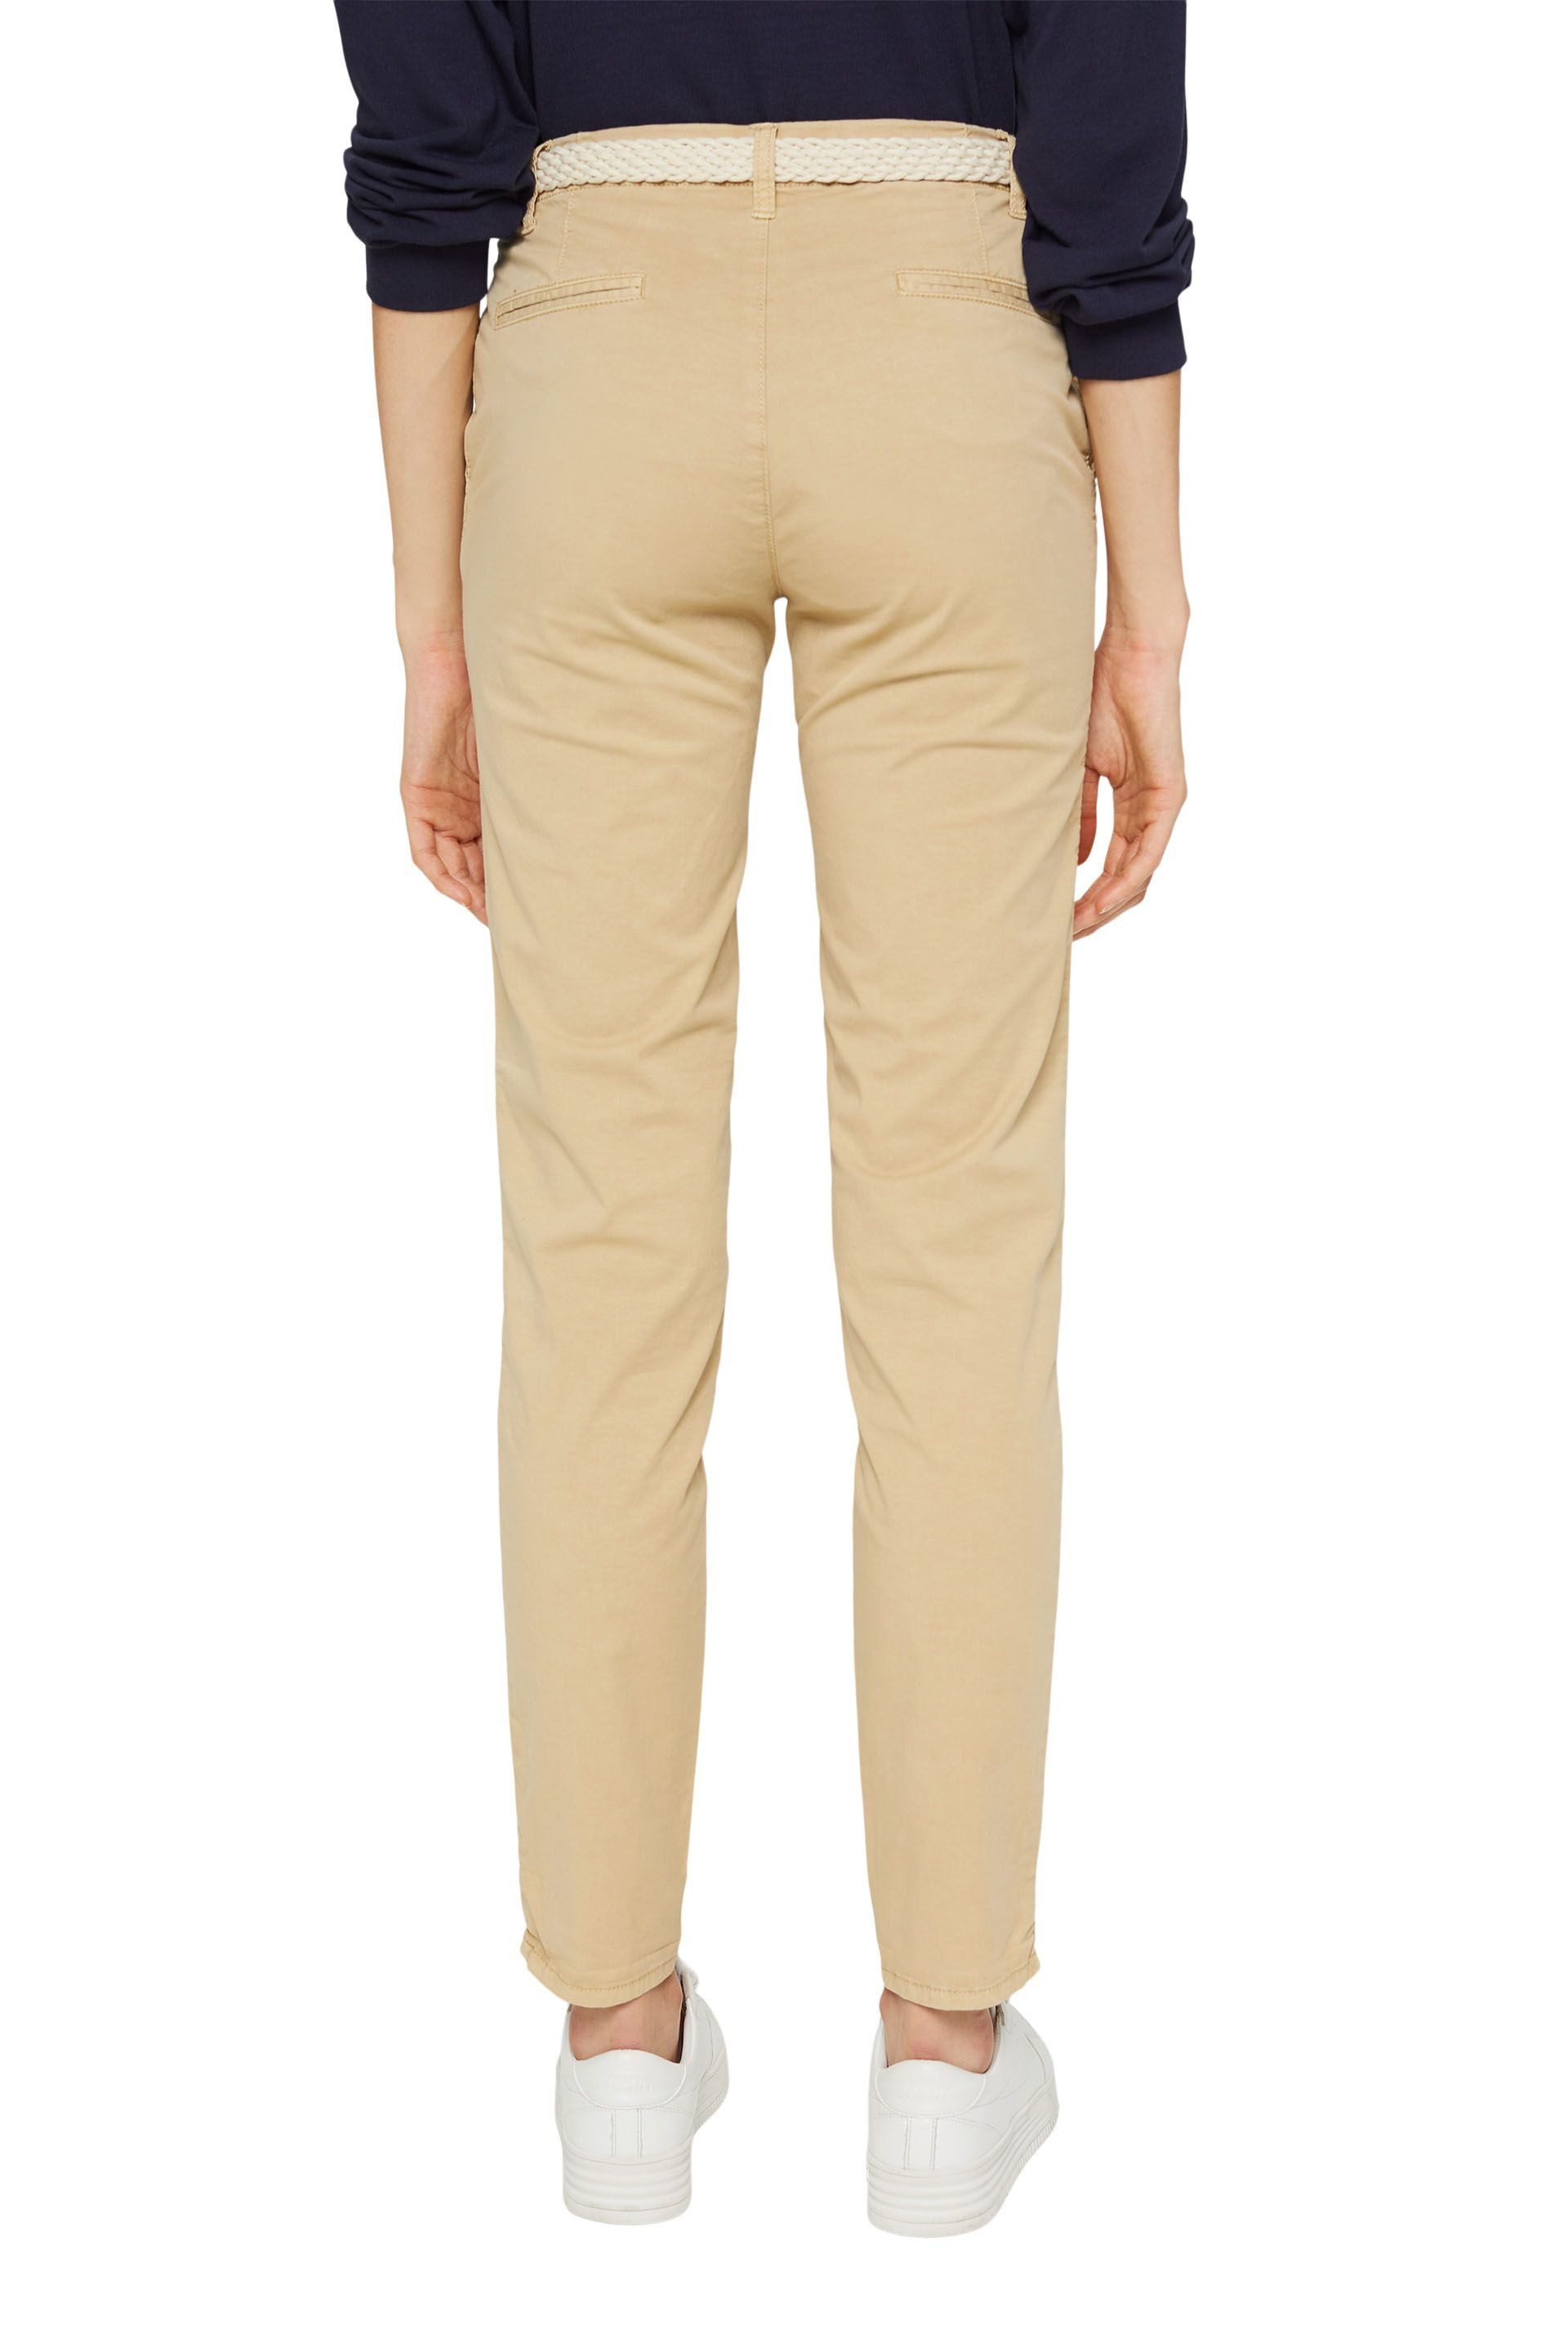 Pantaloni chino con cintura intrecciata, Beige, large image number 2